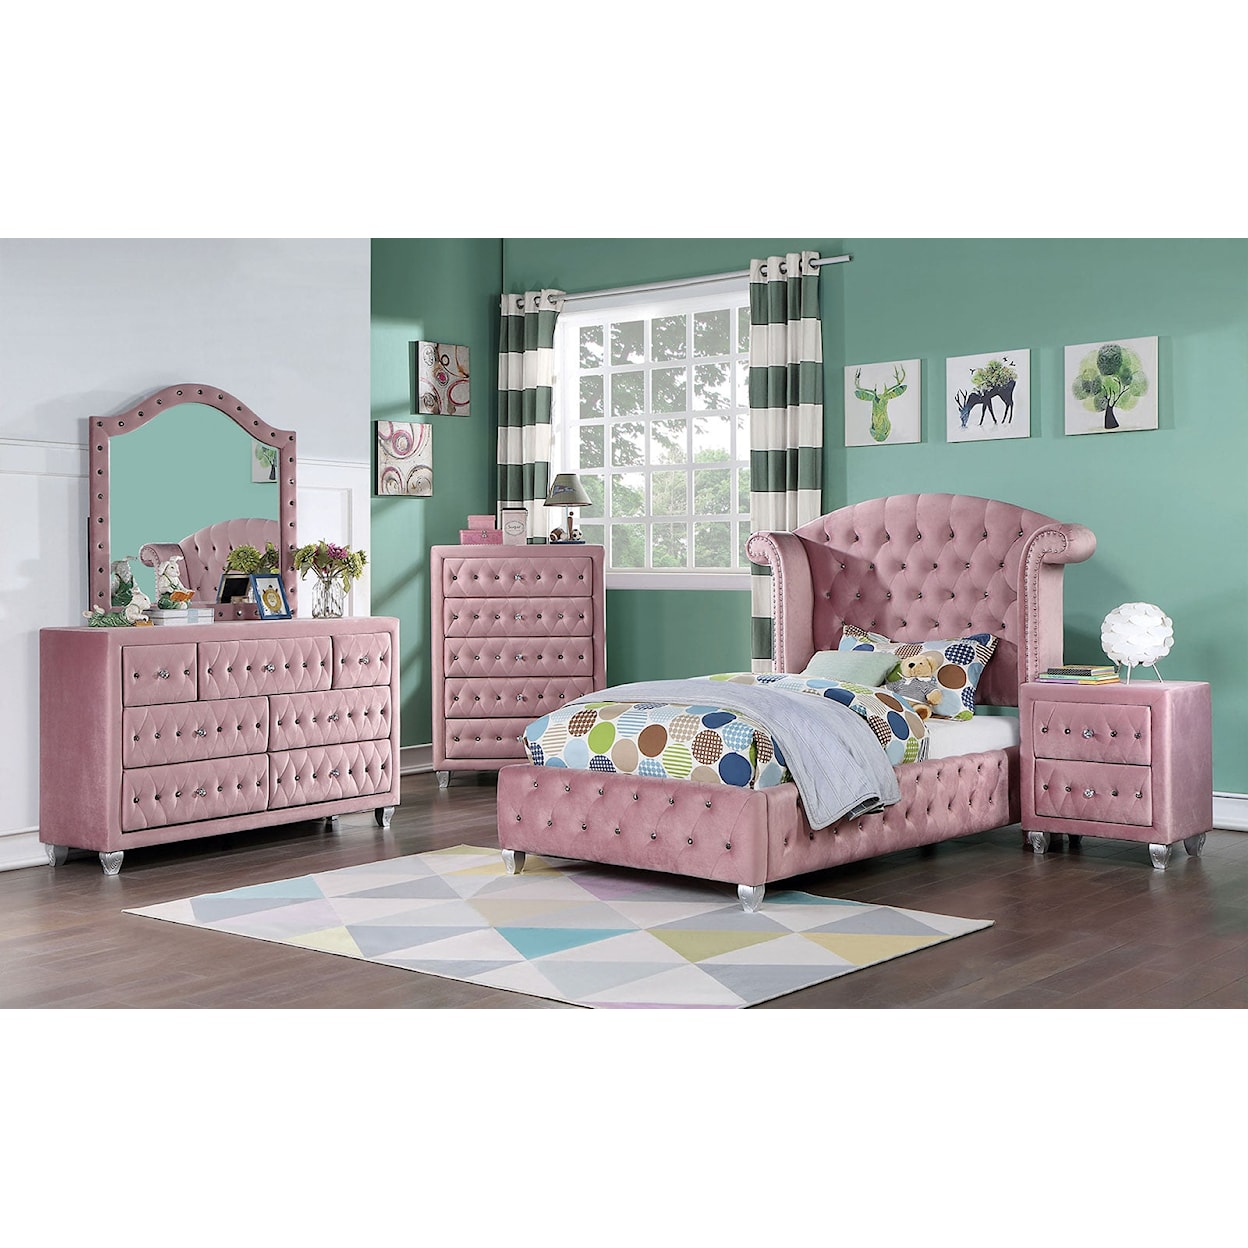 Furniture of America Zohar 4-Piece Twin Bedroom Set